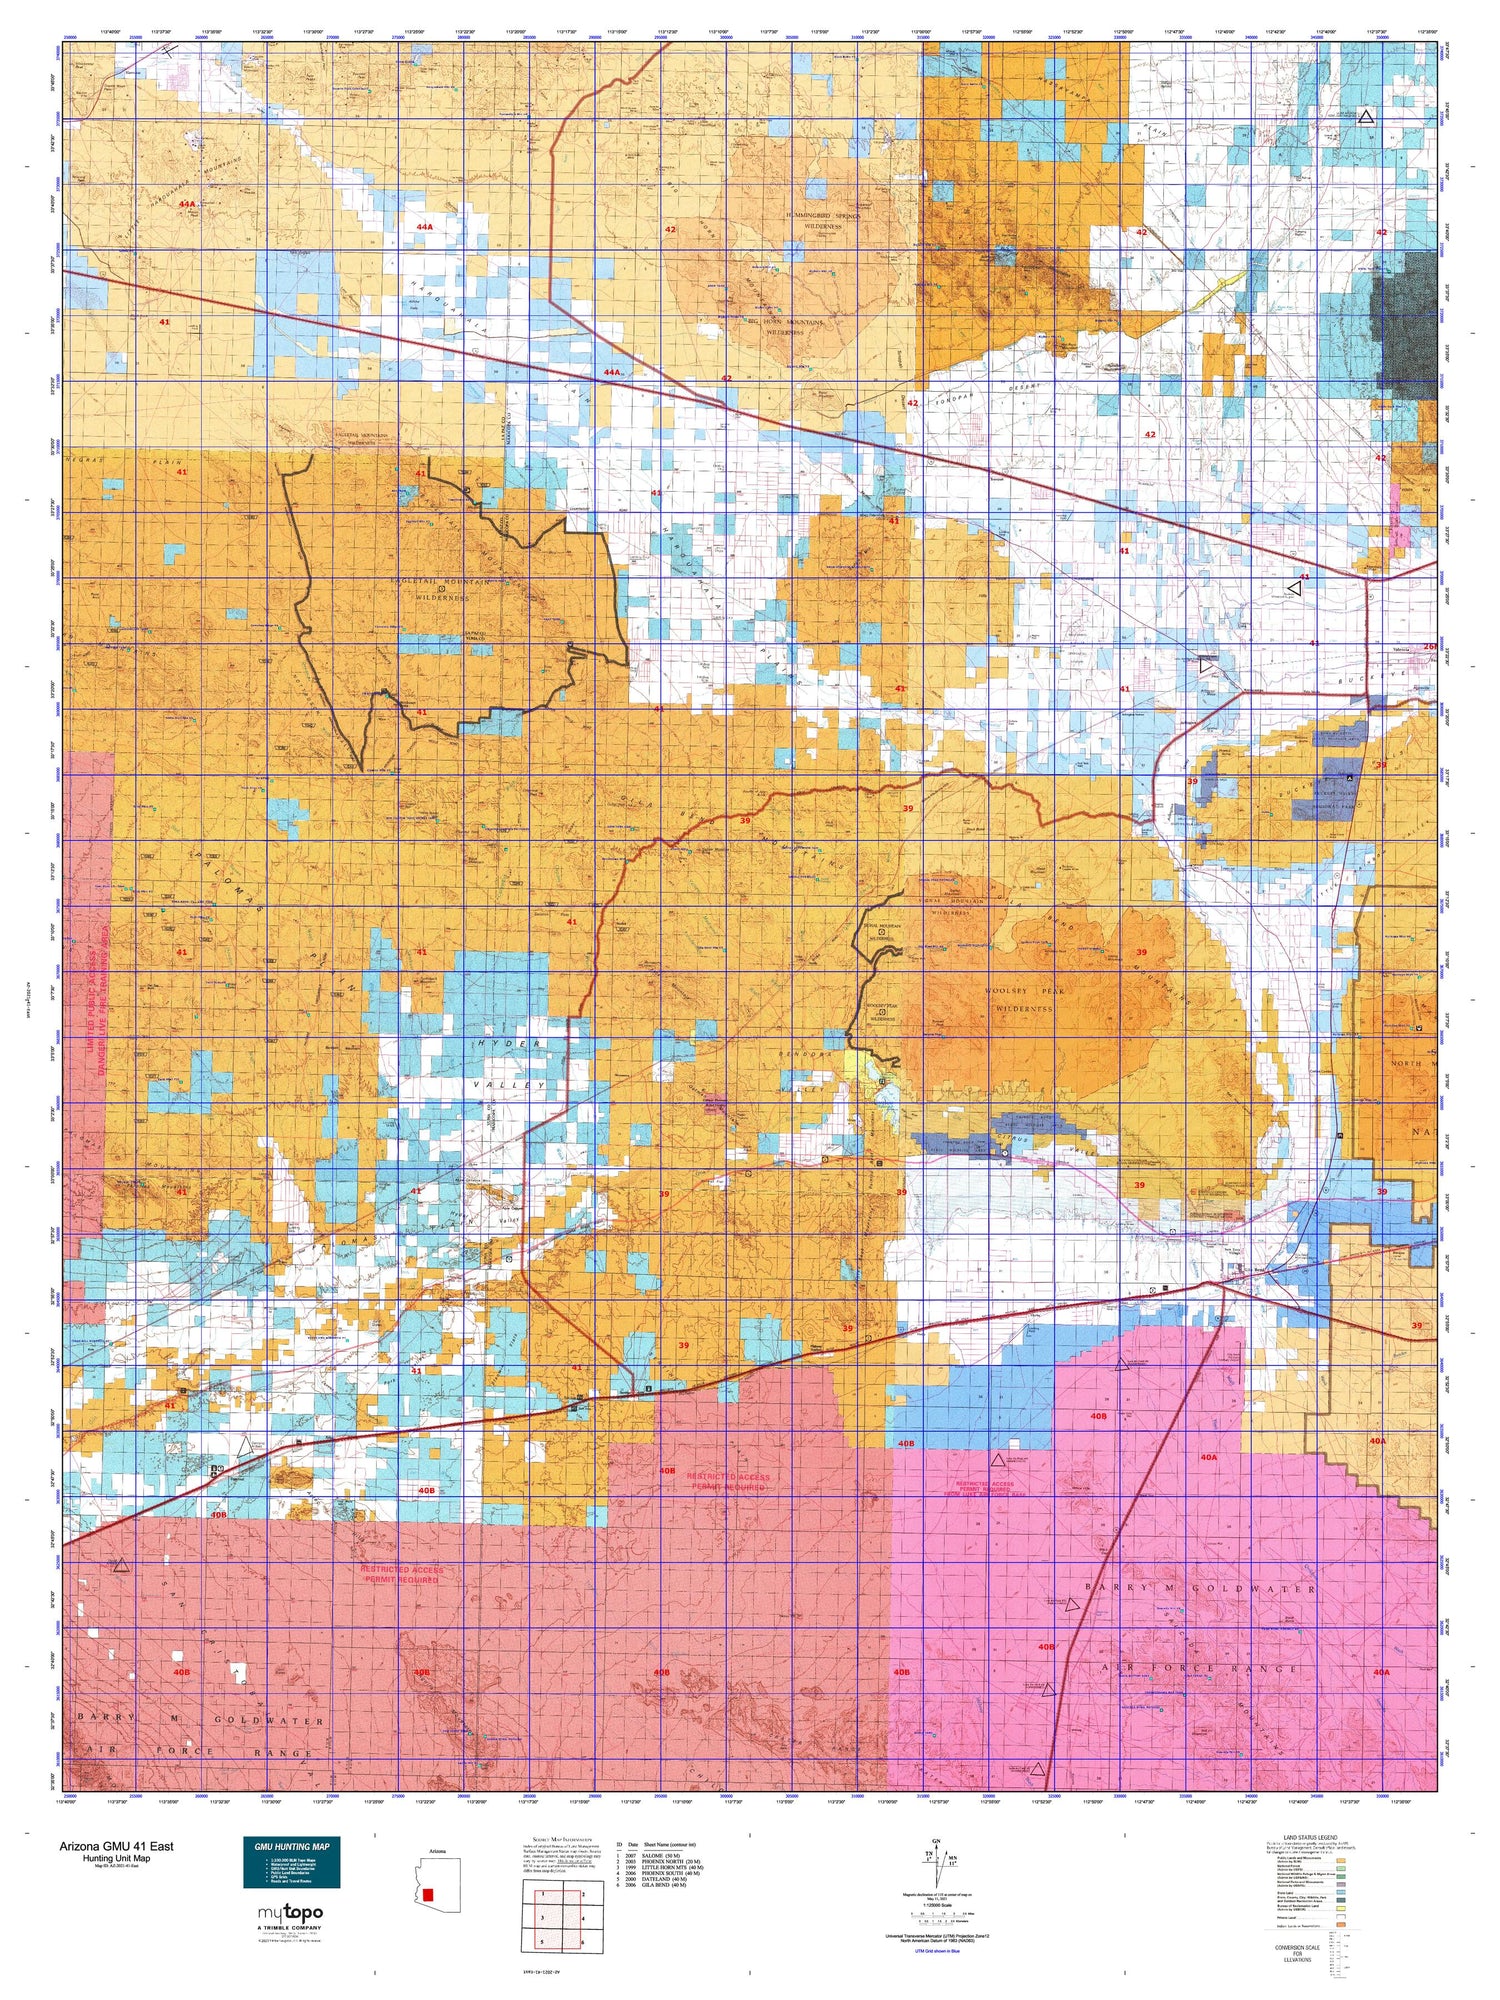 Arizona GMU 41 East Map Image